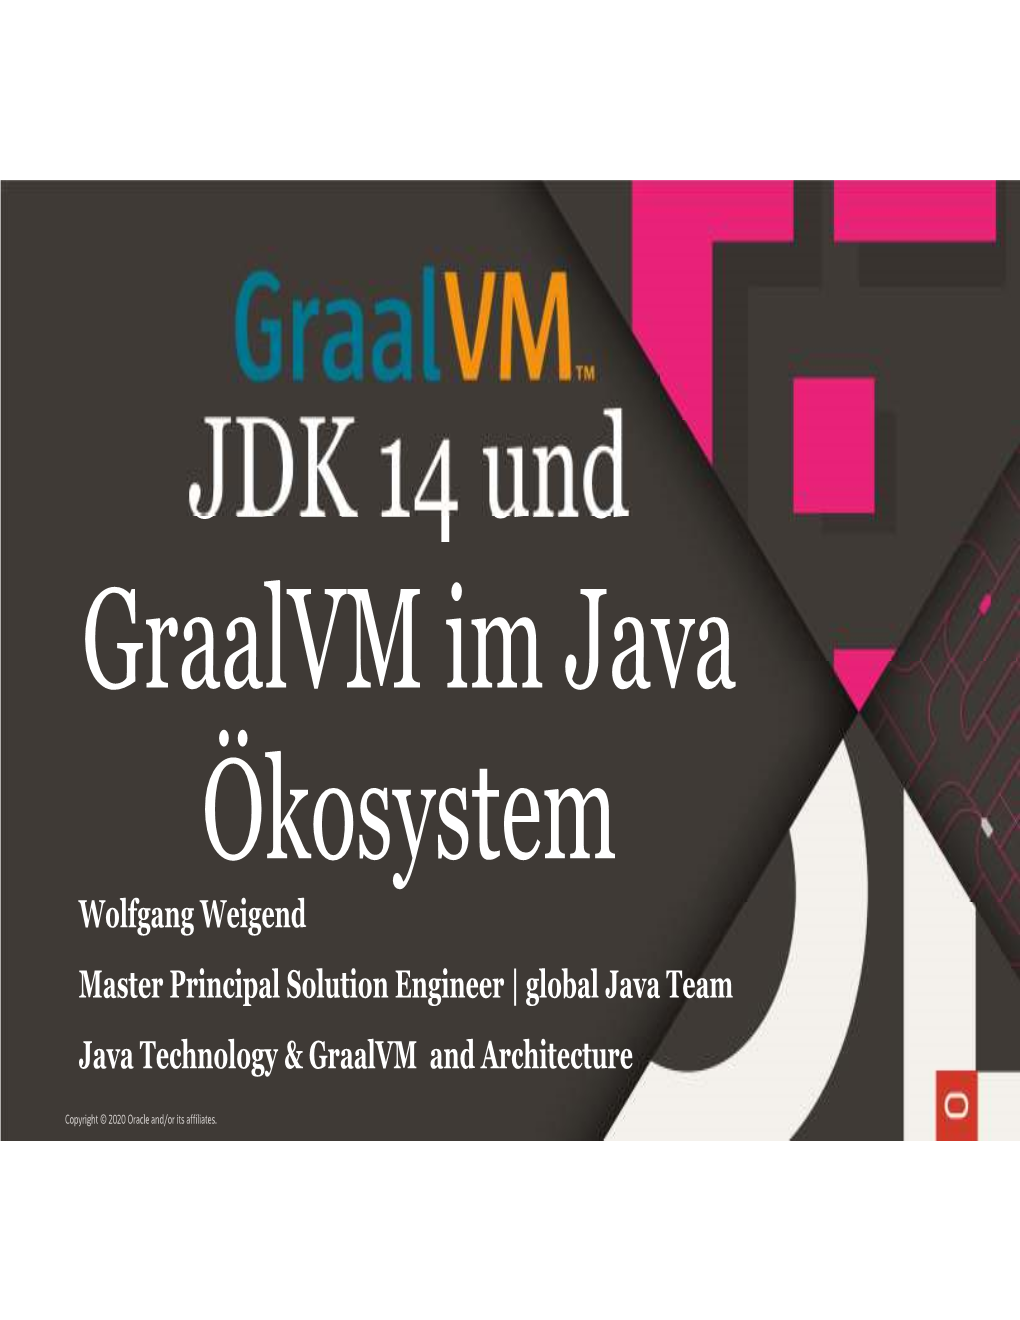 JDK 14 Und Graalvm Im Java Ökosystem Wolfgang Weigend Master Principal Solution Engineer | Global Java Team Java Technology & Graalvm and Architecture